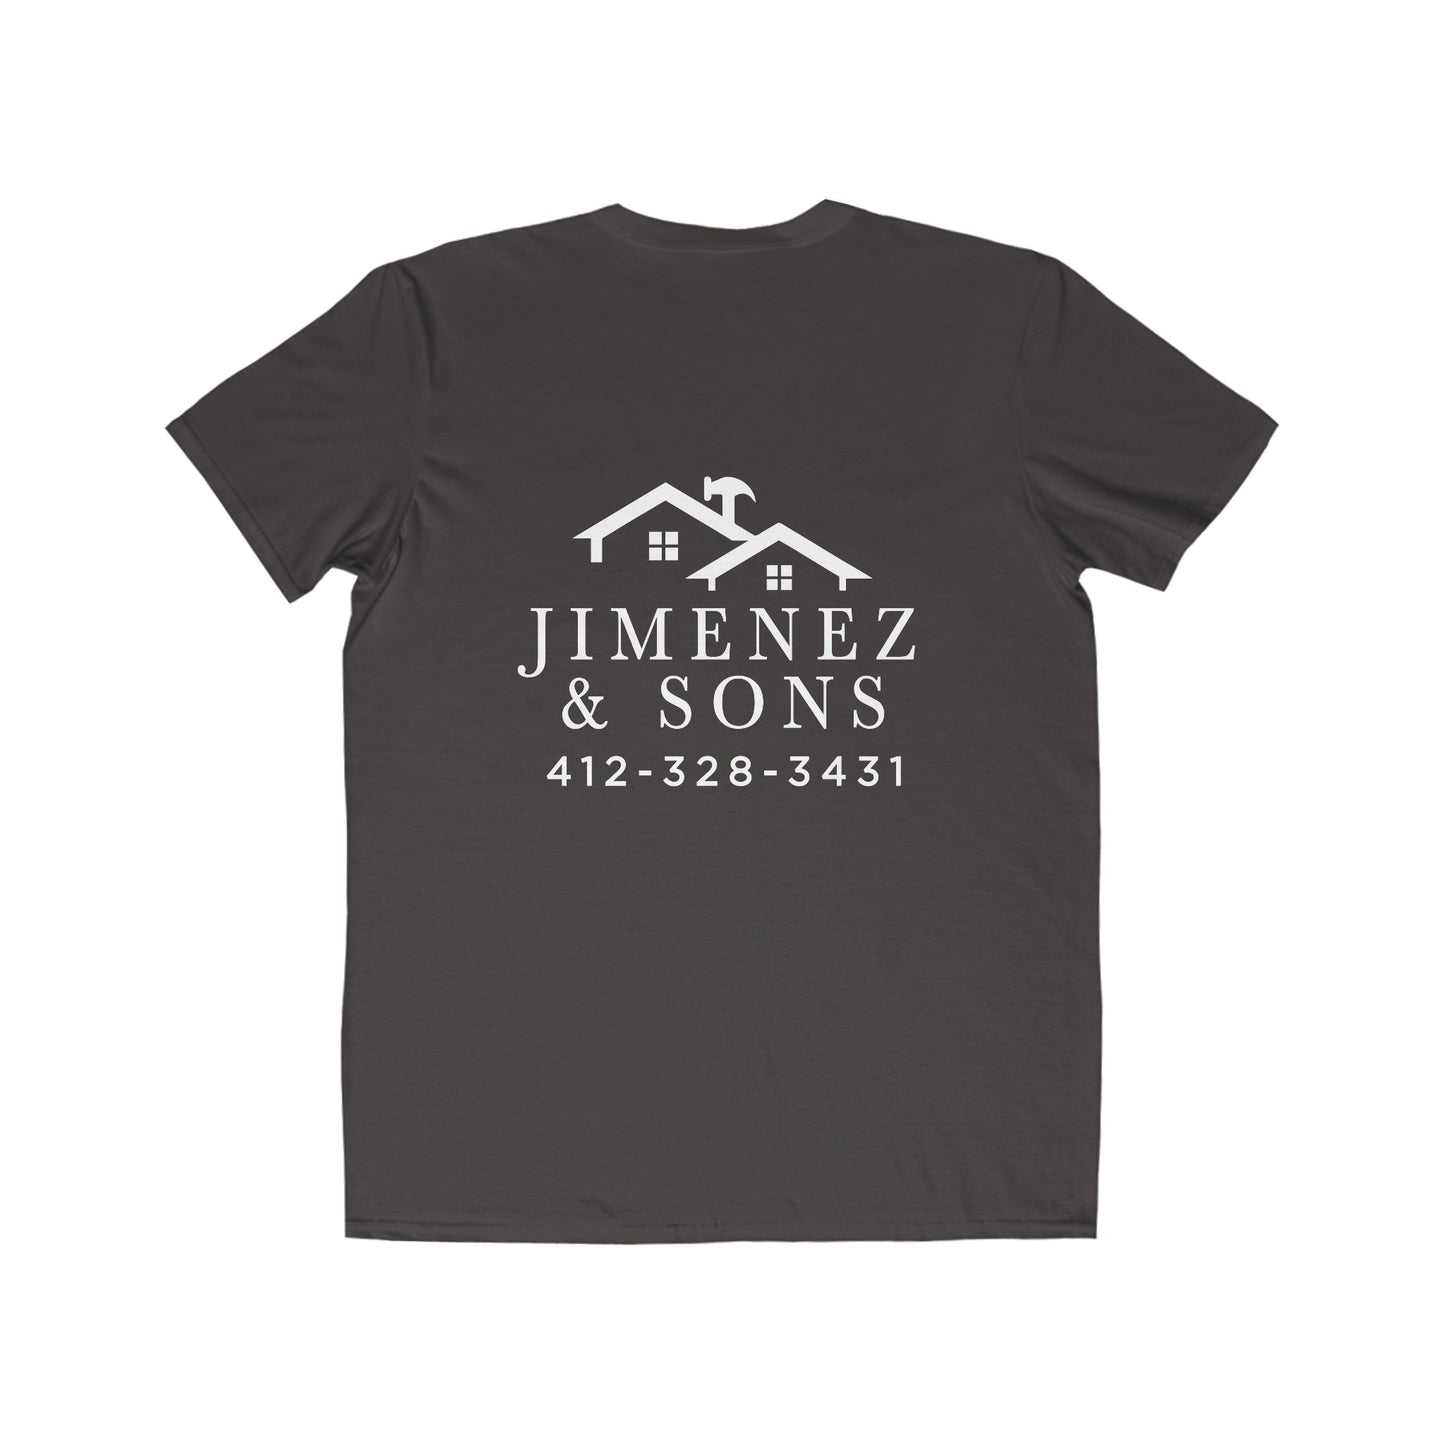 Jimenez and Sons Lightweight Fashion Tee